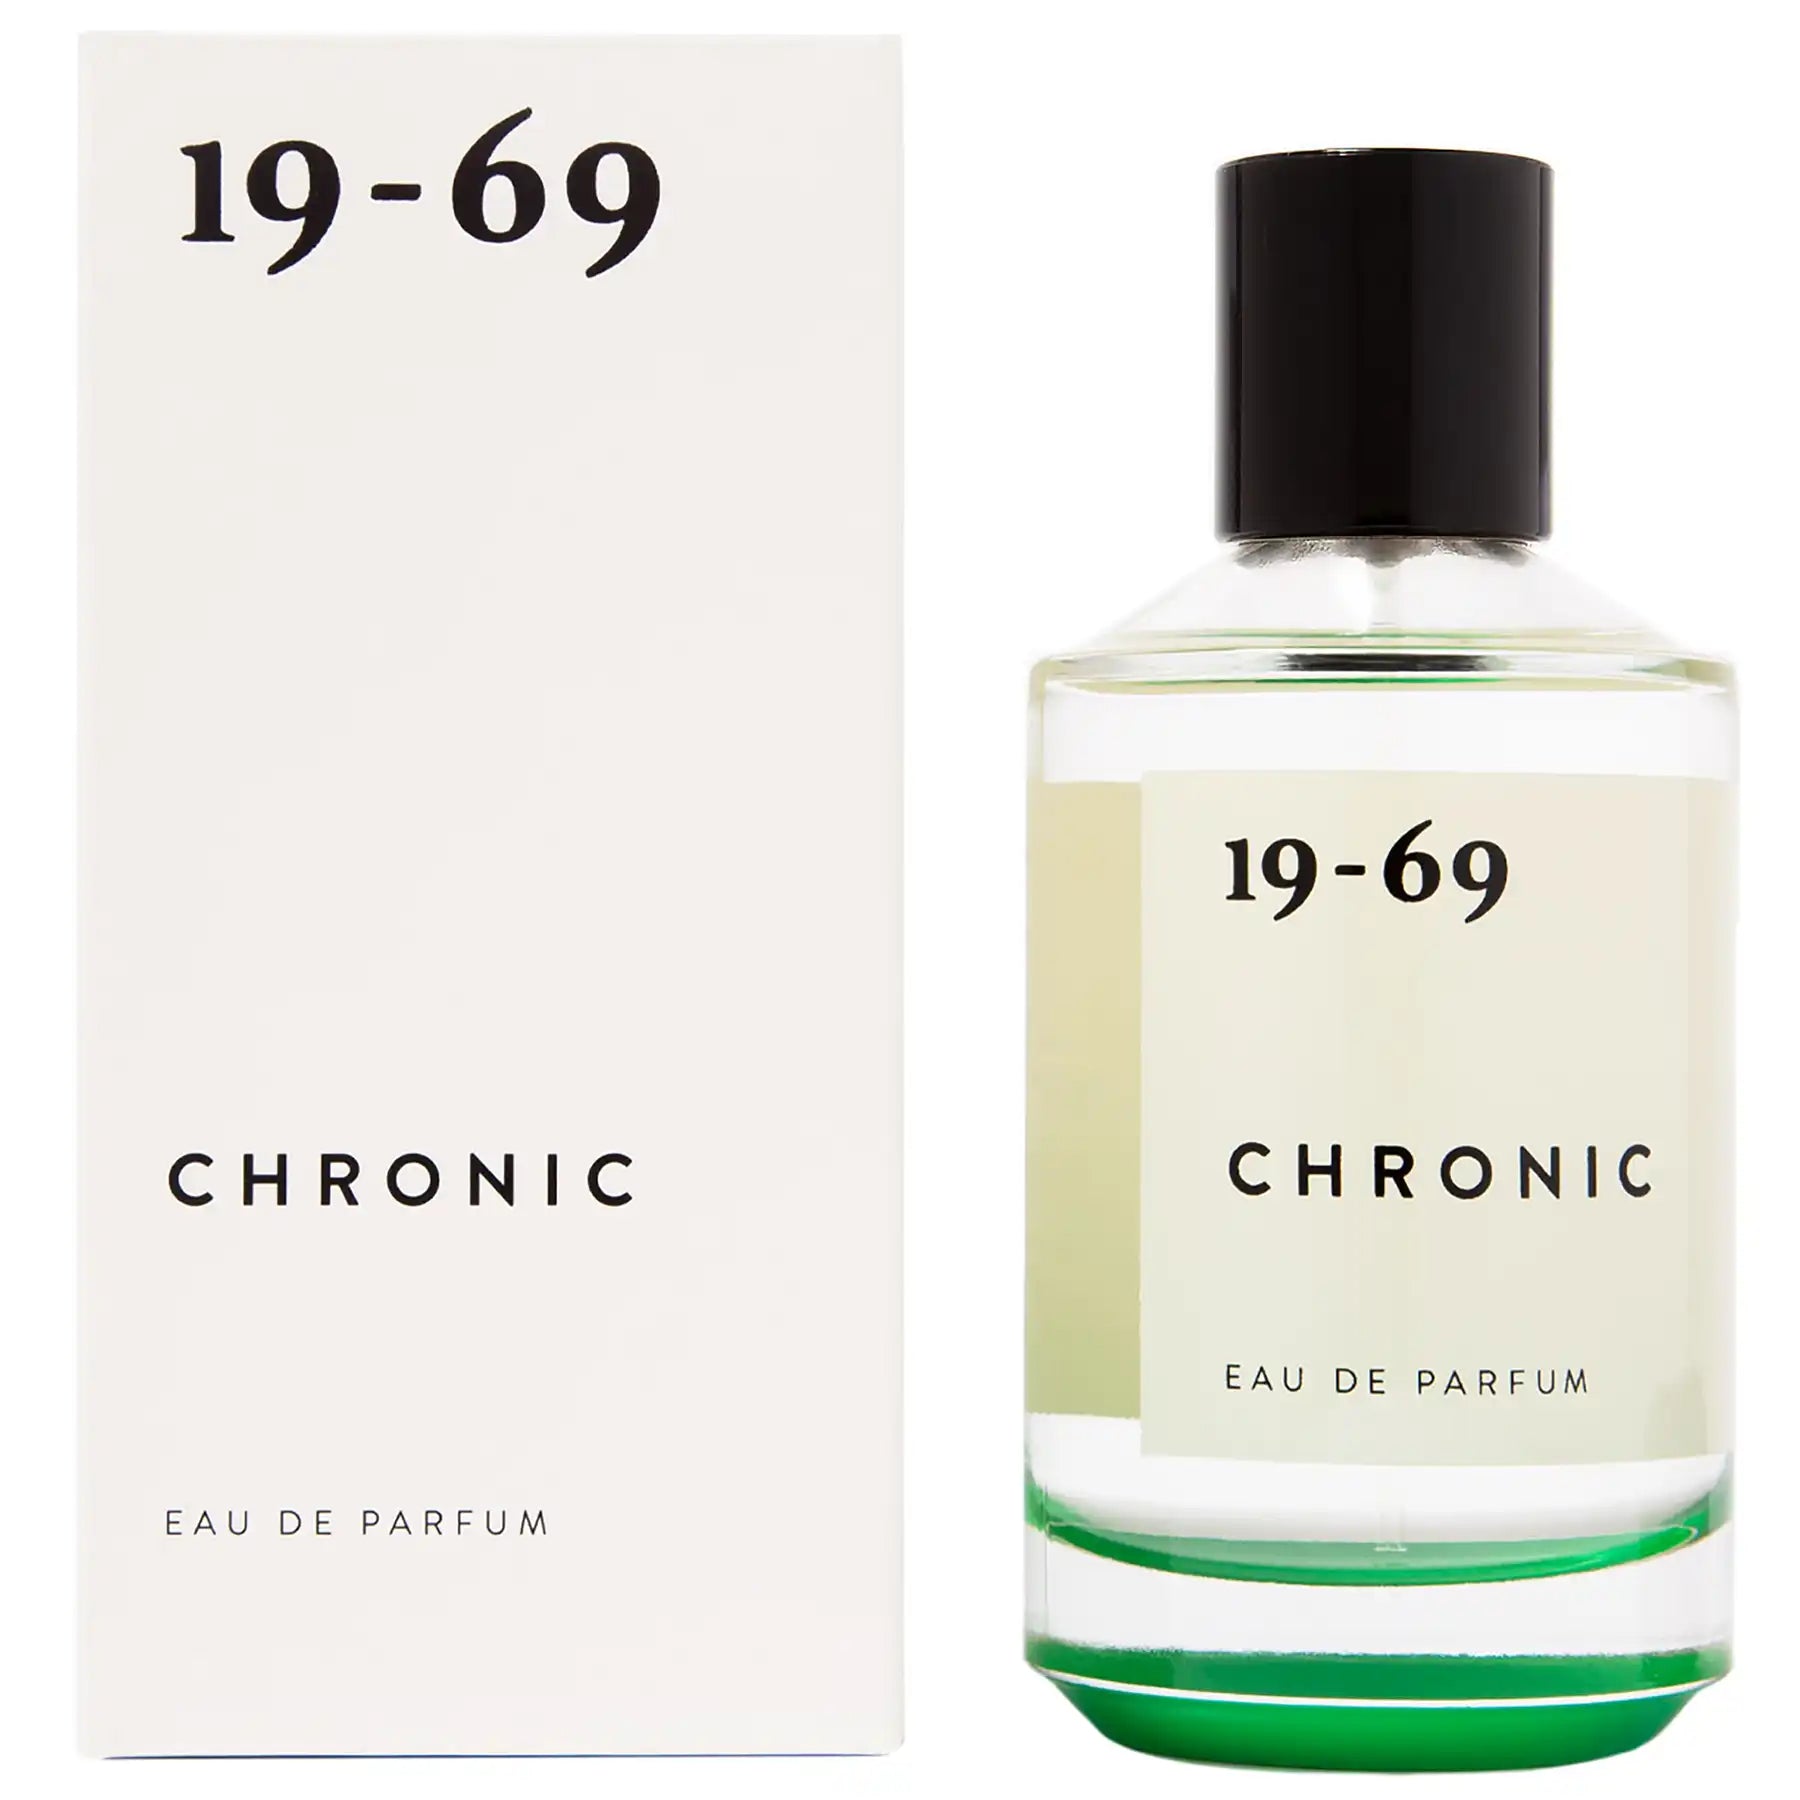 1969 Chronic Perfume